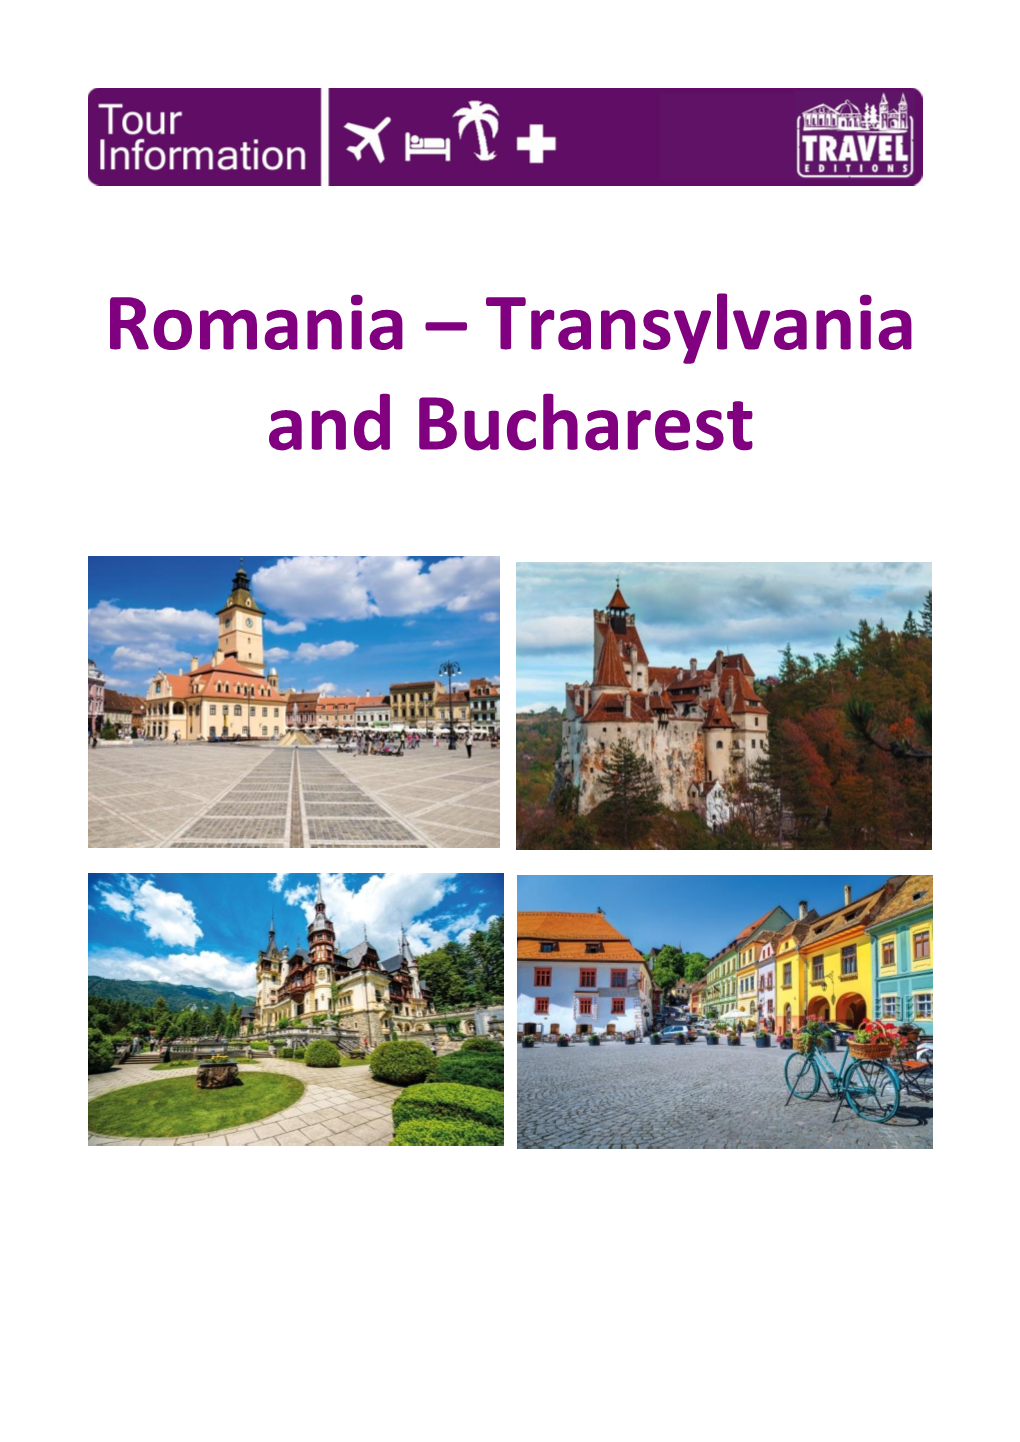 Romania – Transylvania and Bucharest